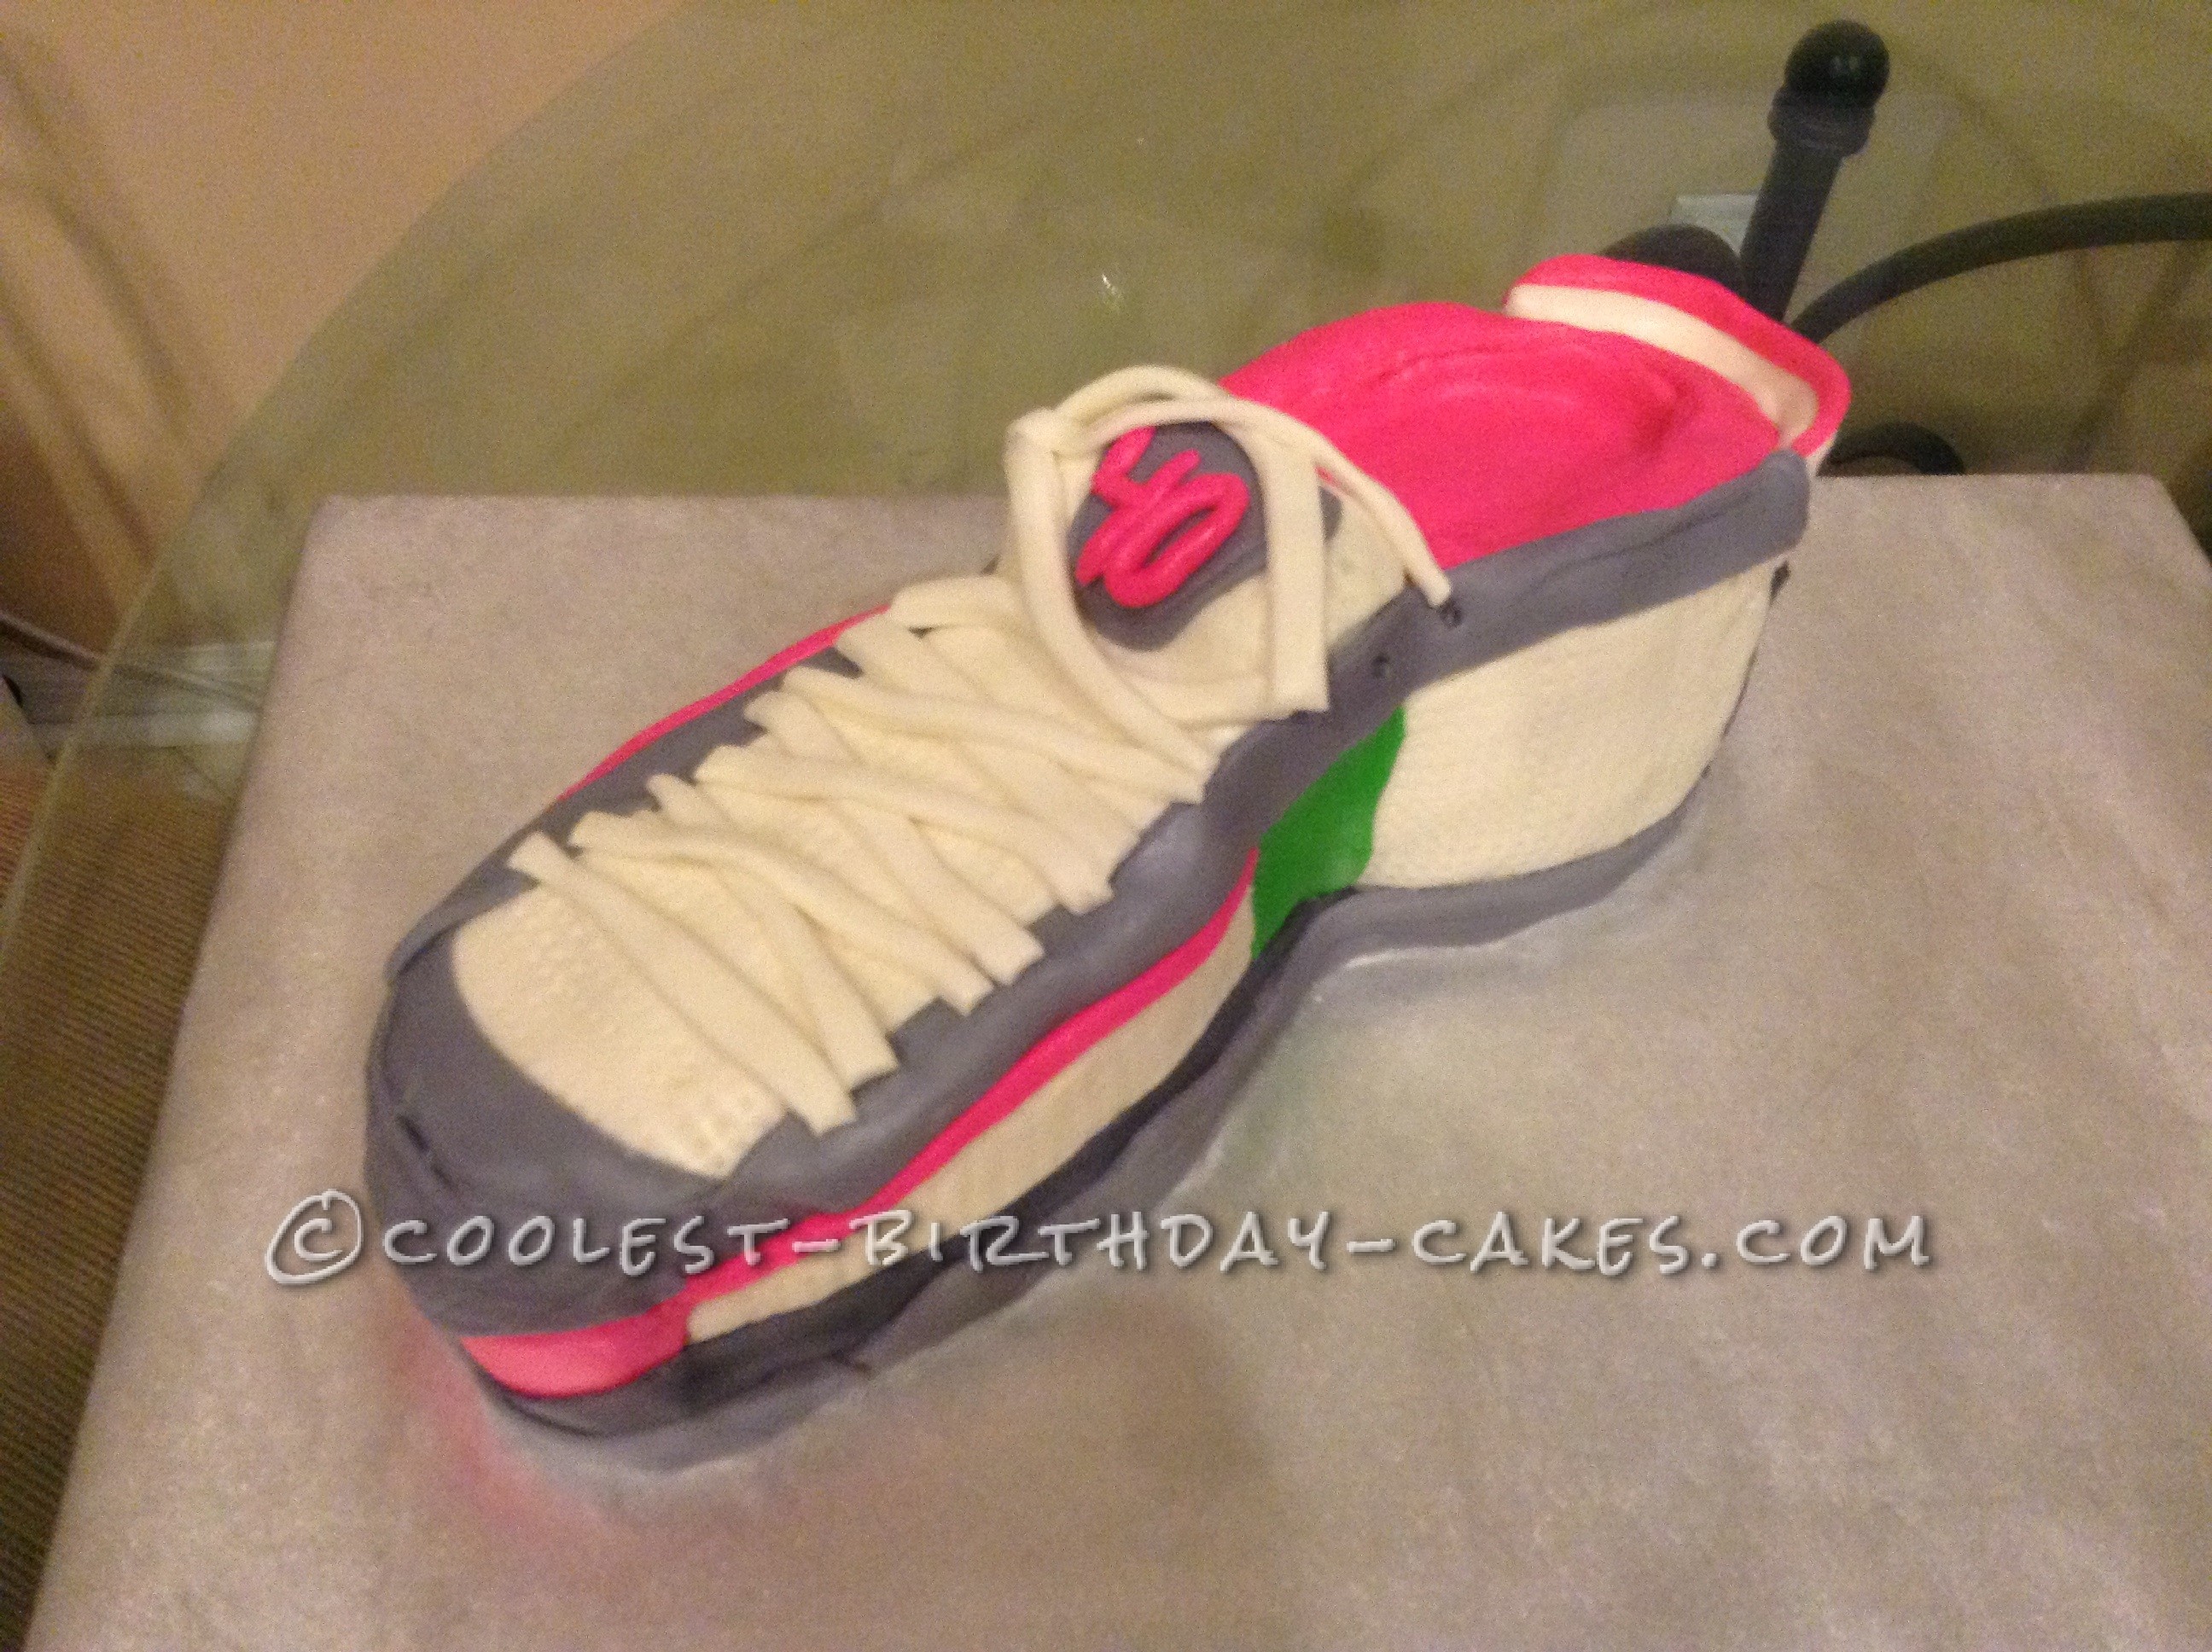 Coolest Running Shoe Cake for 40 and Fabulous Marathoner